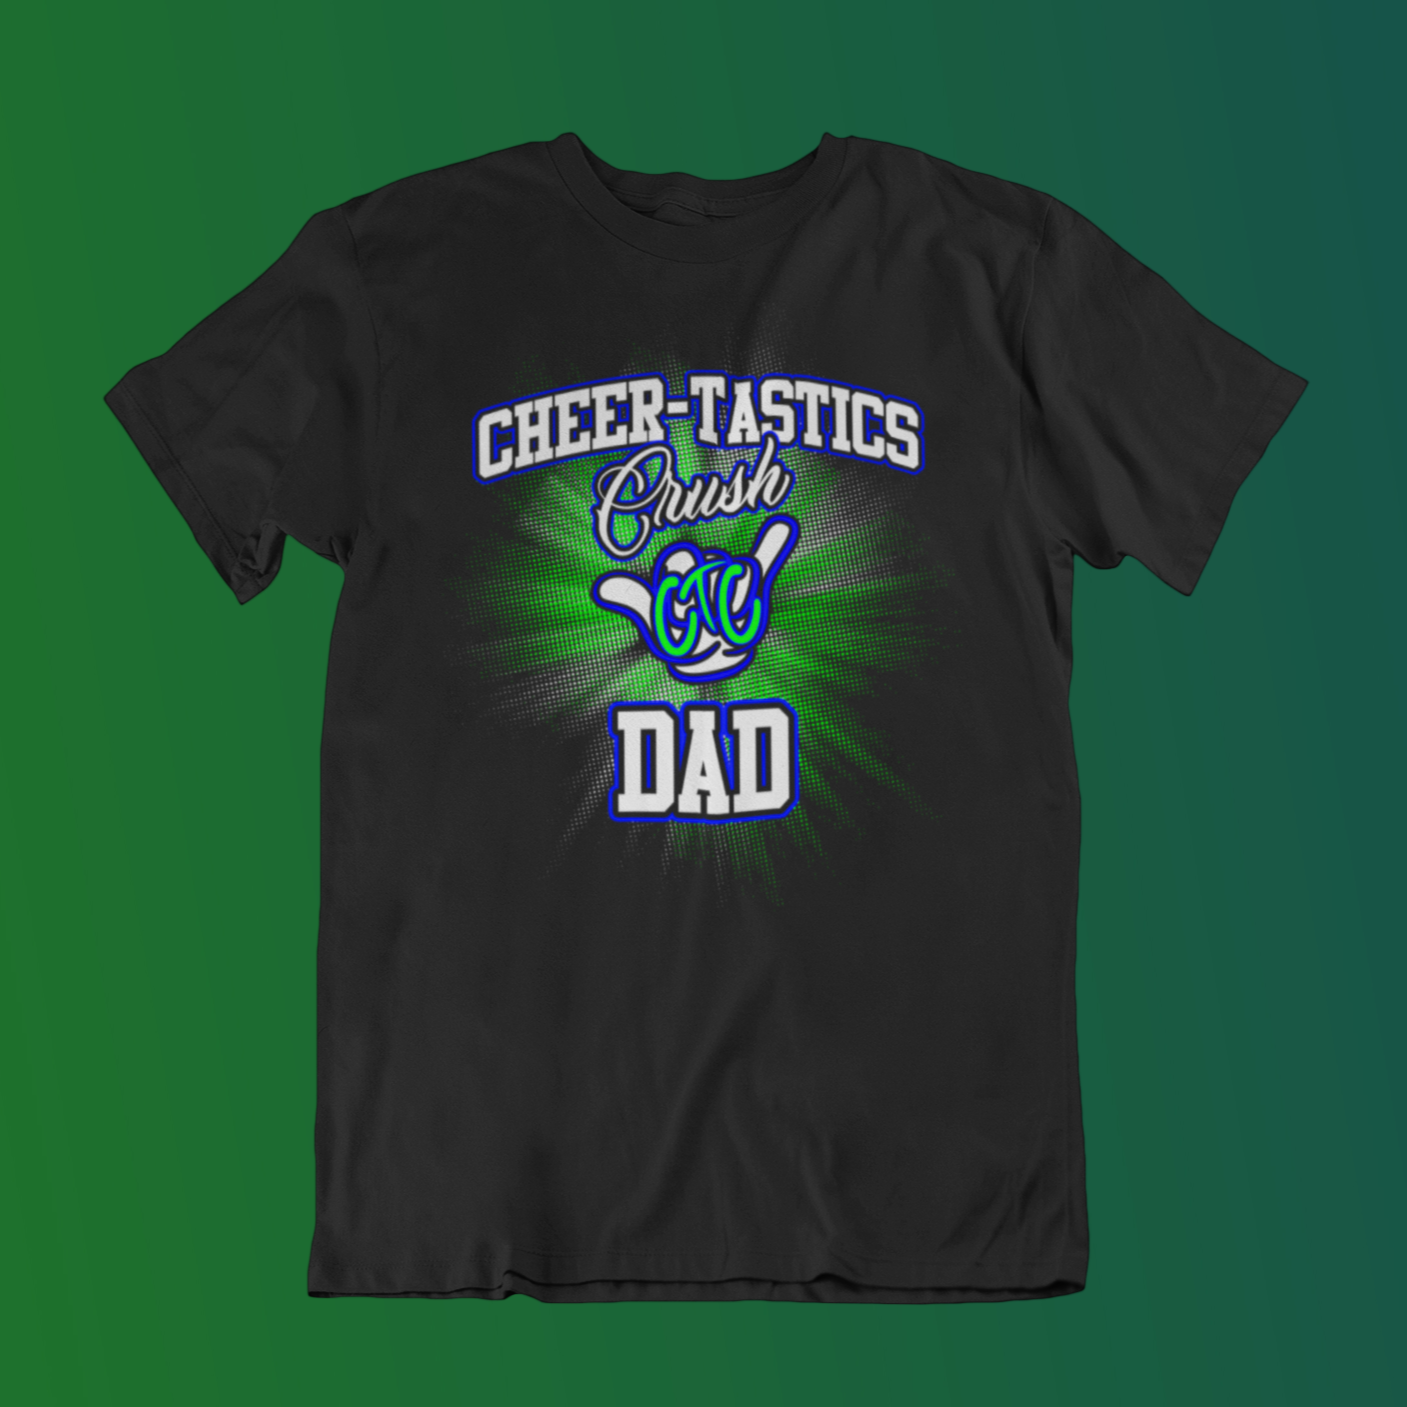 Cheer-Tastics DAD 2.0